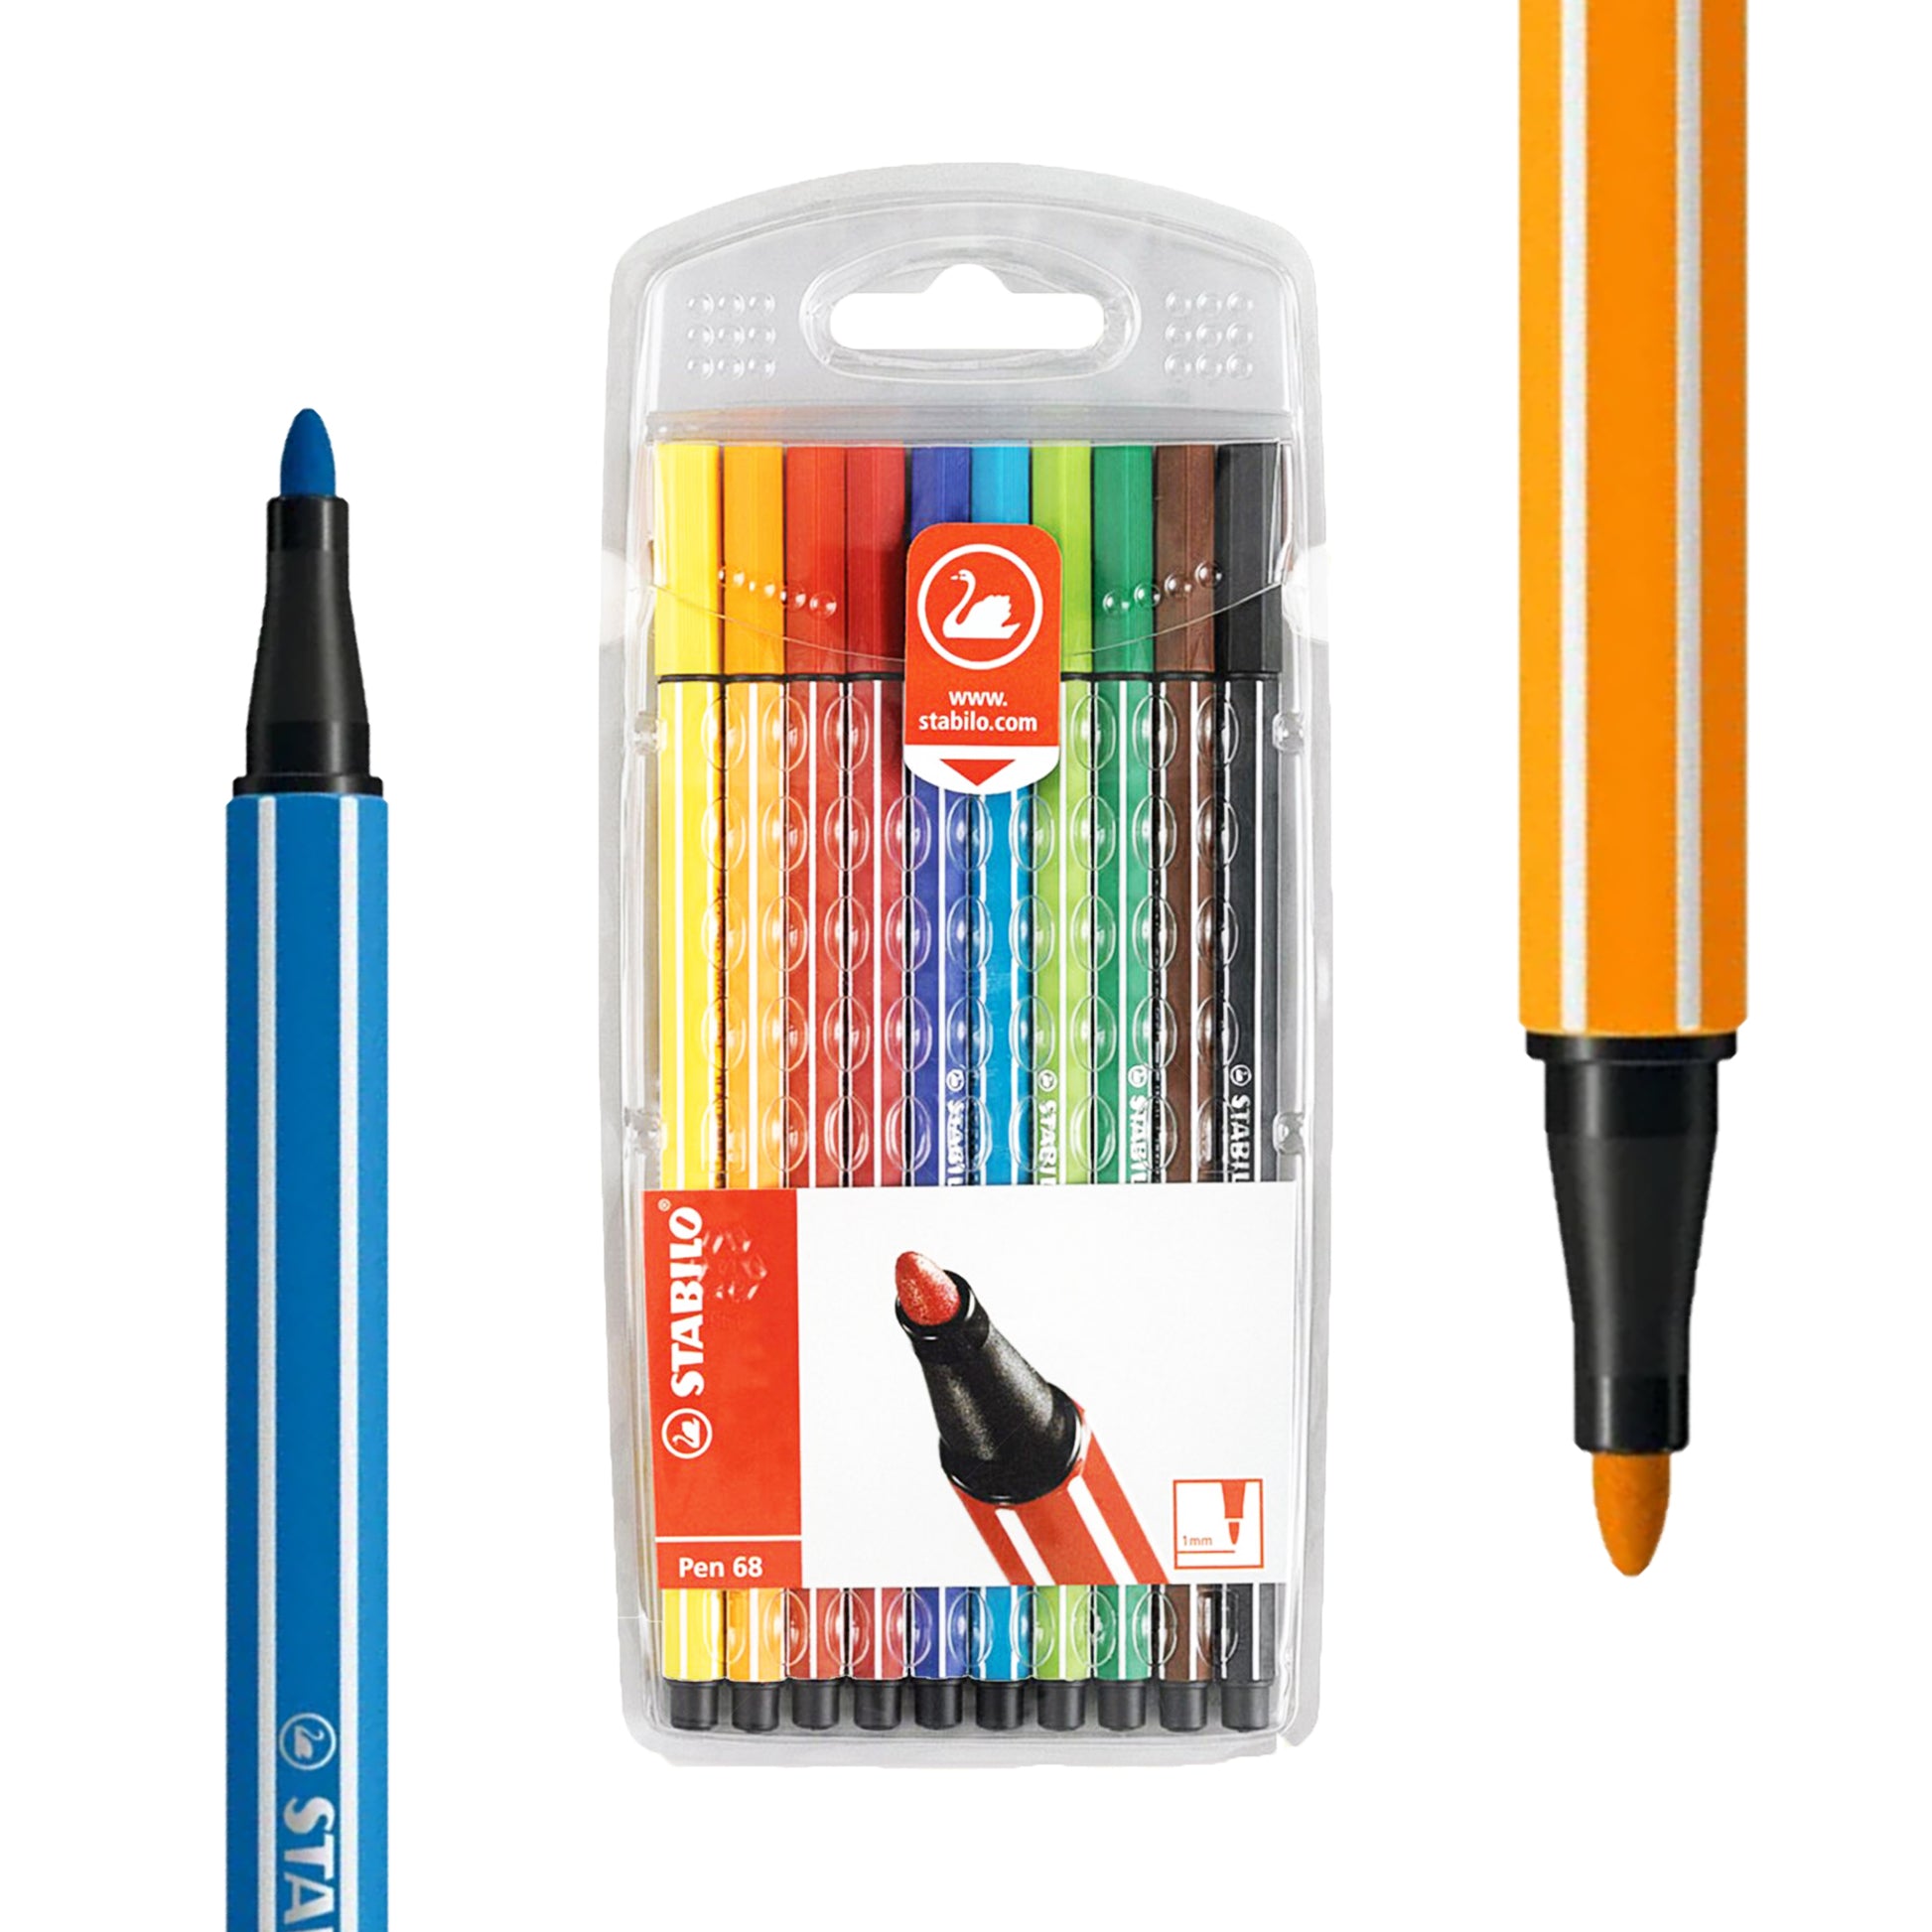 Stabilo 68 Pen art marker set of 10 primary colors.